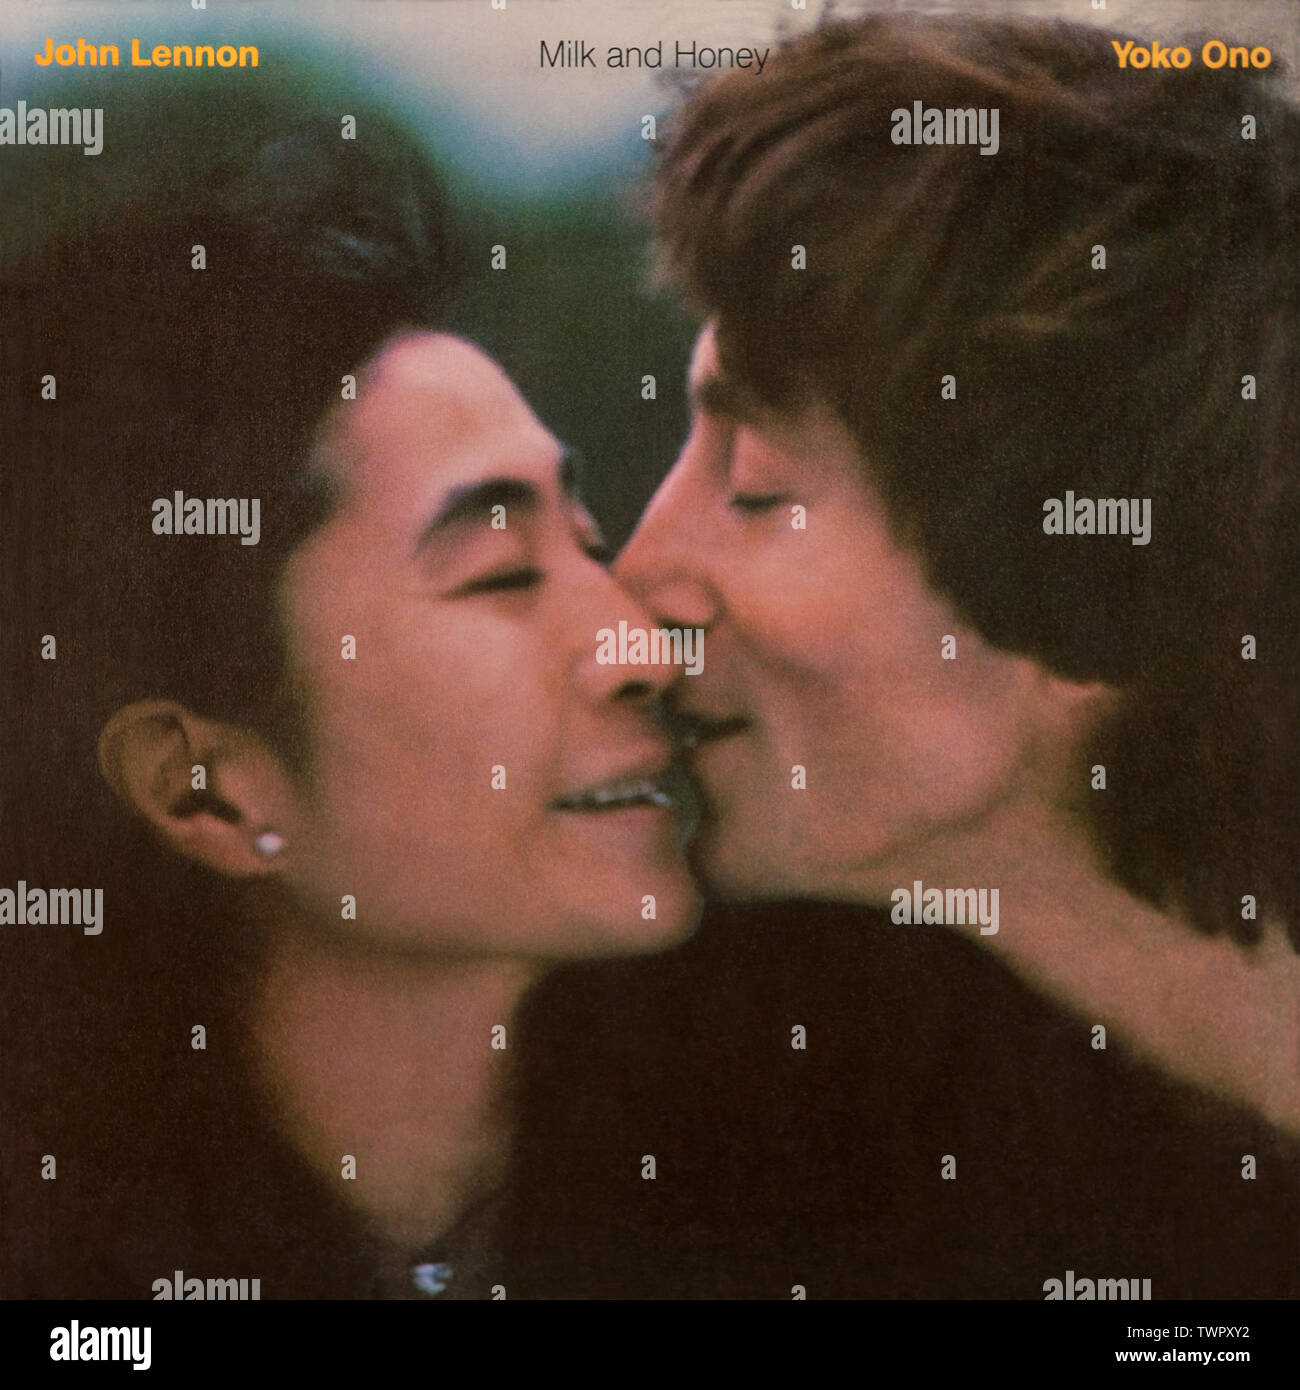 John Lennon & Yoko Ono - original Vinyl Album Cover - Milk and Honey - 1984 Stockfoto